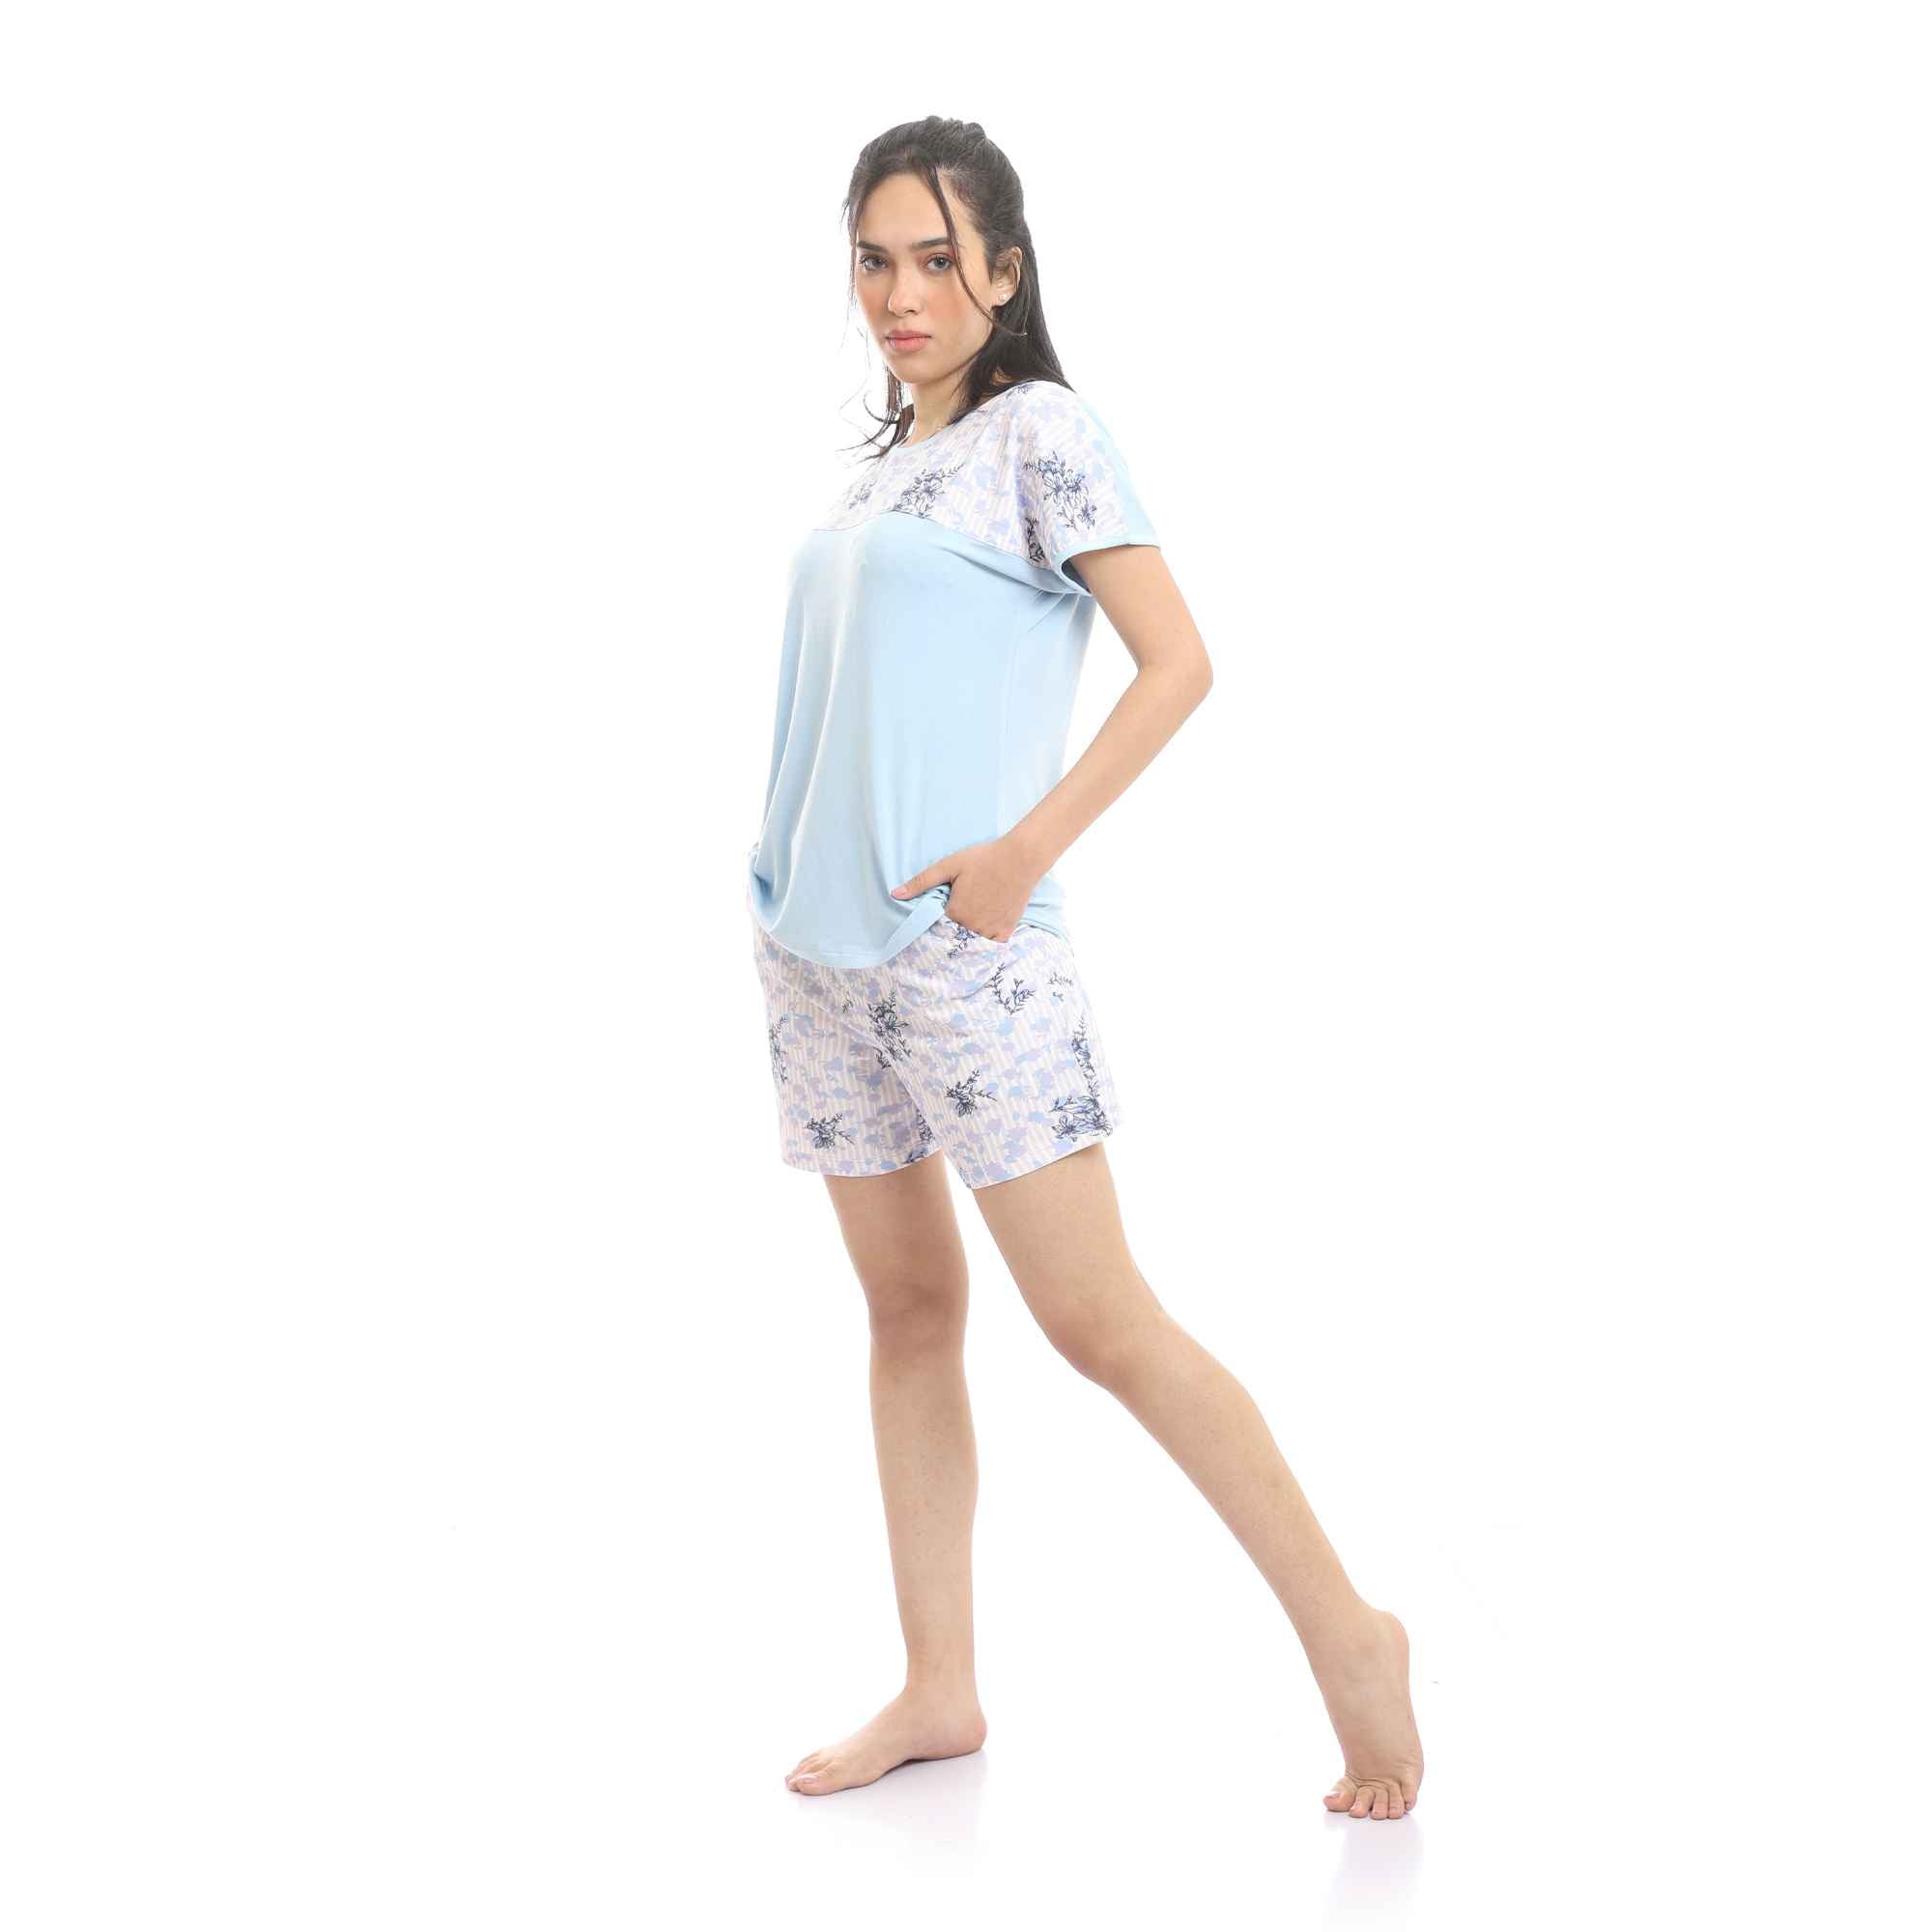 Short Sleeves Tee & Patterned Shorts Pajama Set - Baby Blue & Rose